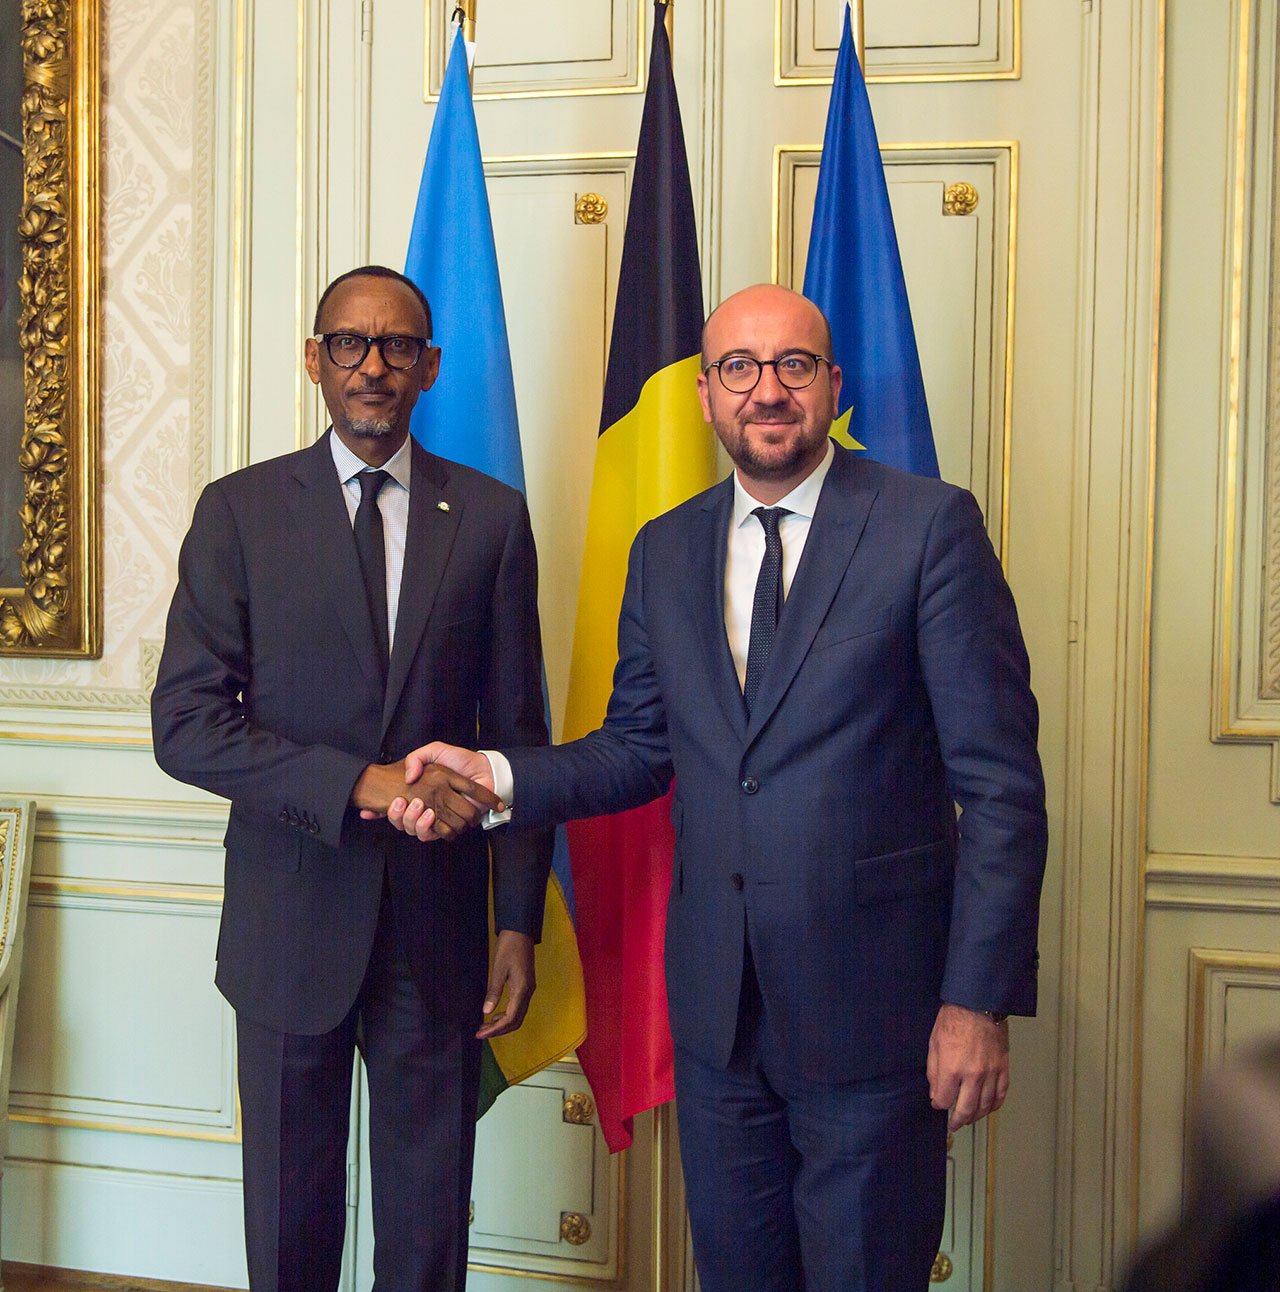 Perezida Kagame yakirwa na Minisitiri w